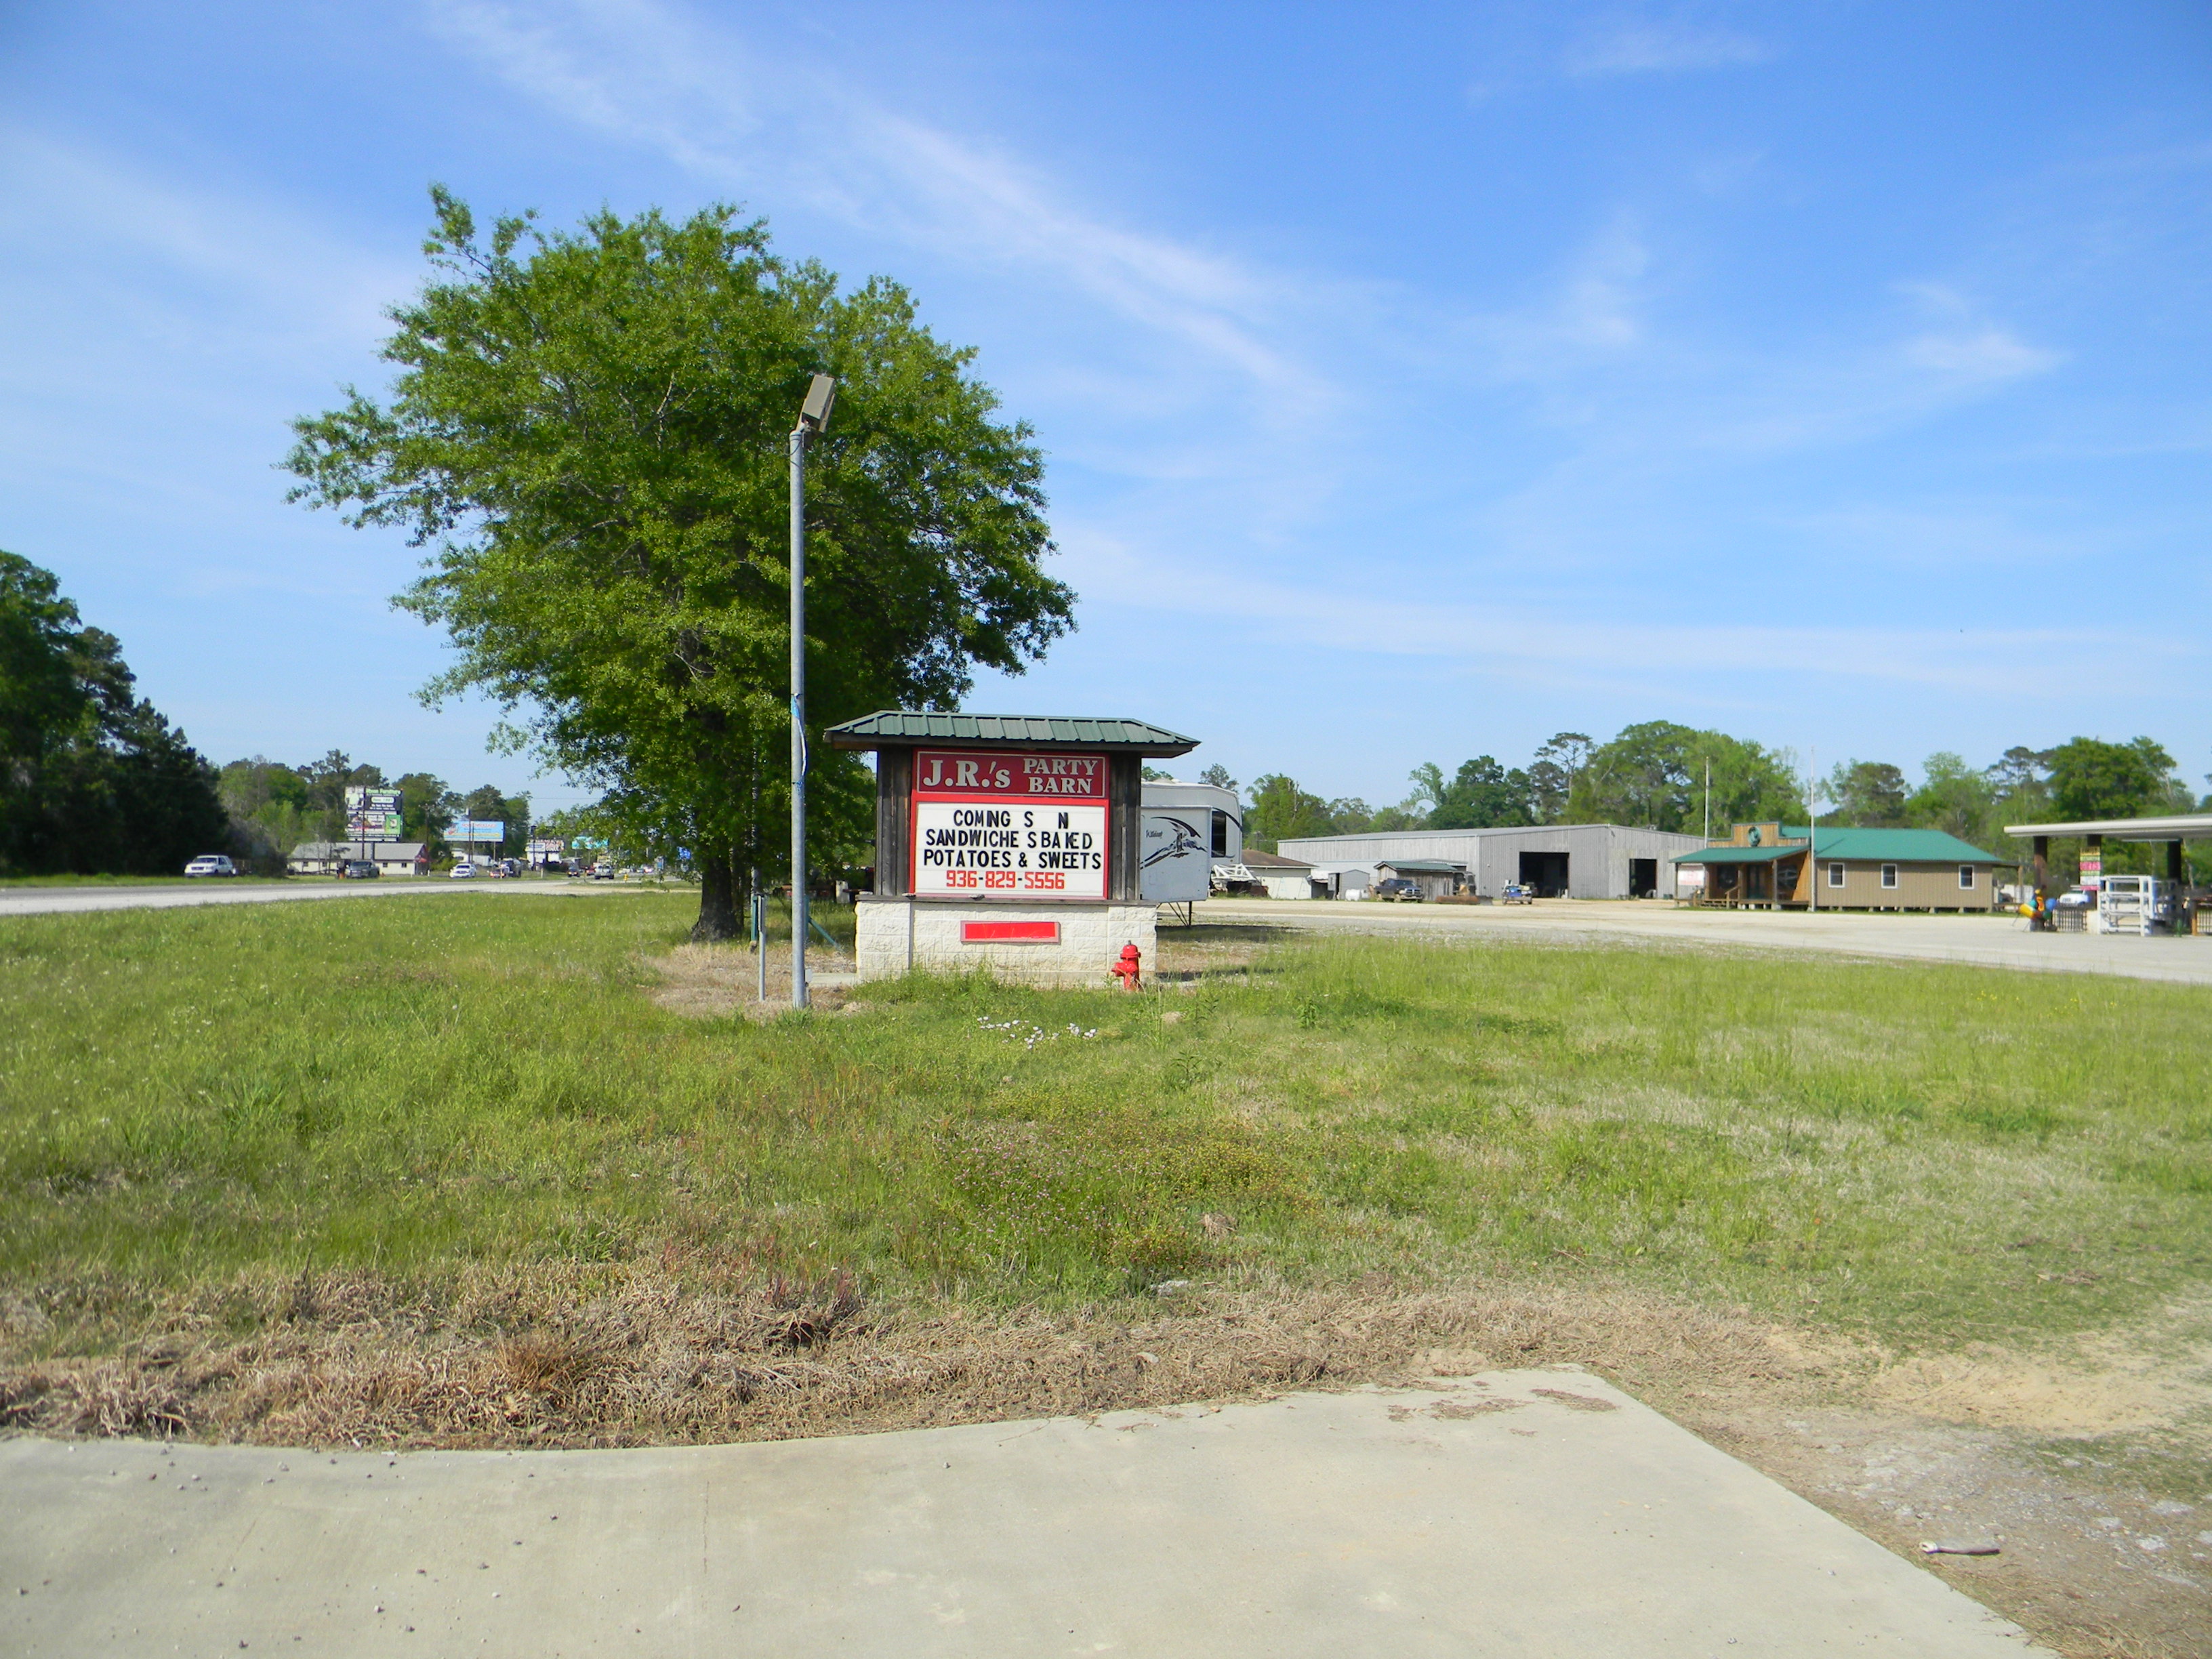 jrs-barn-highway-sign